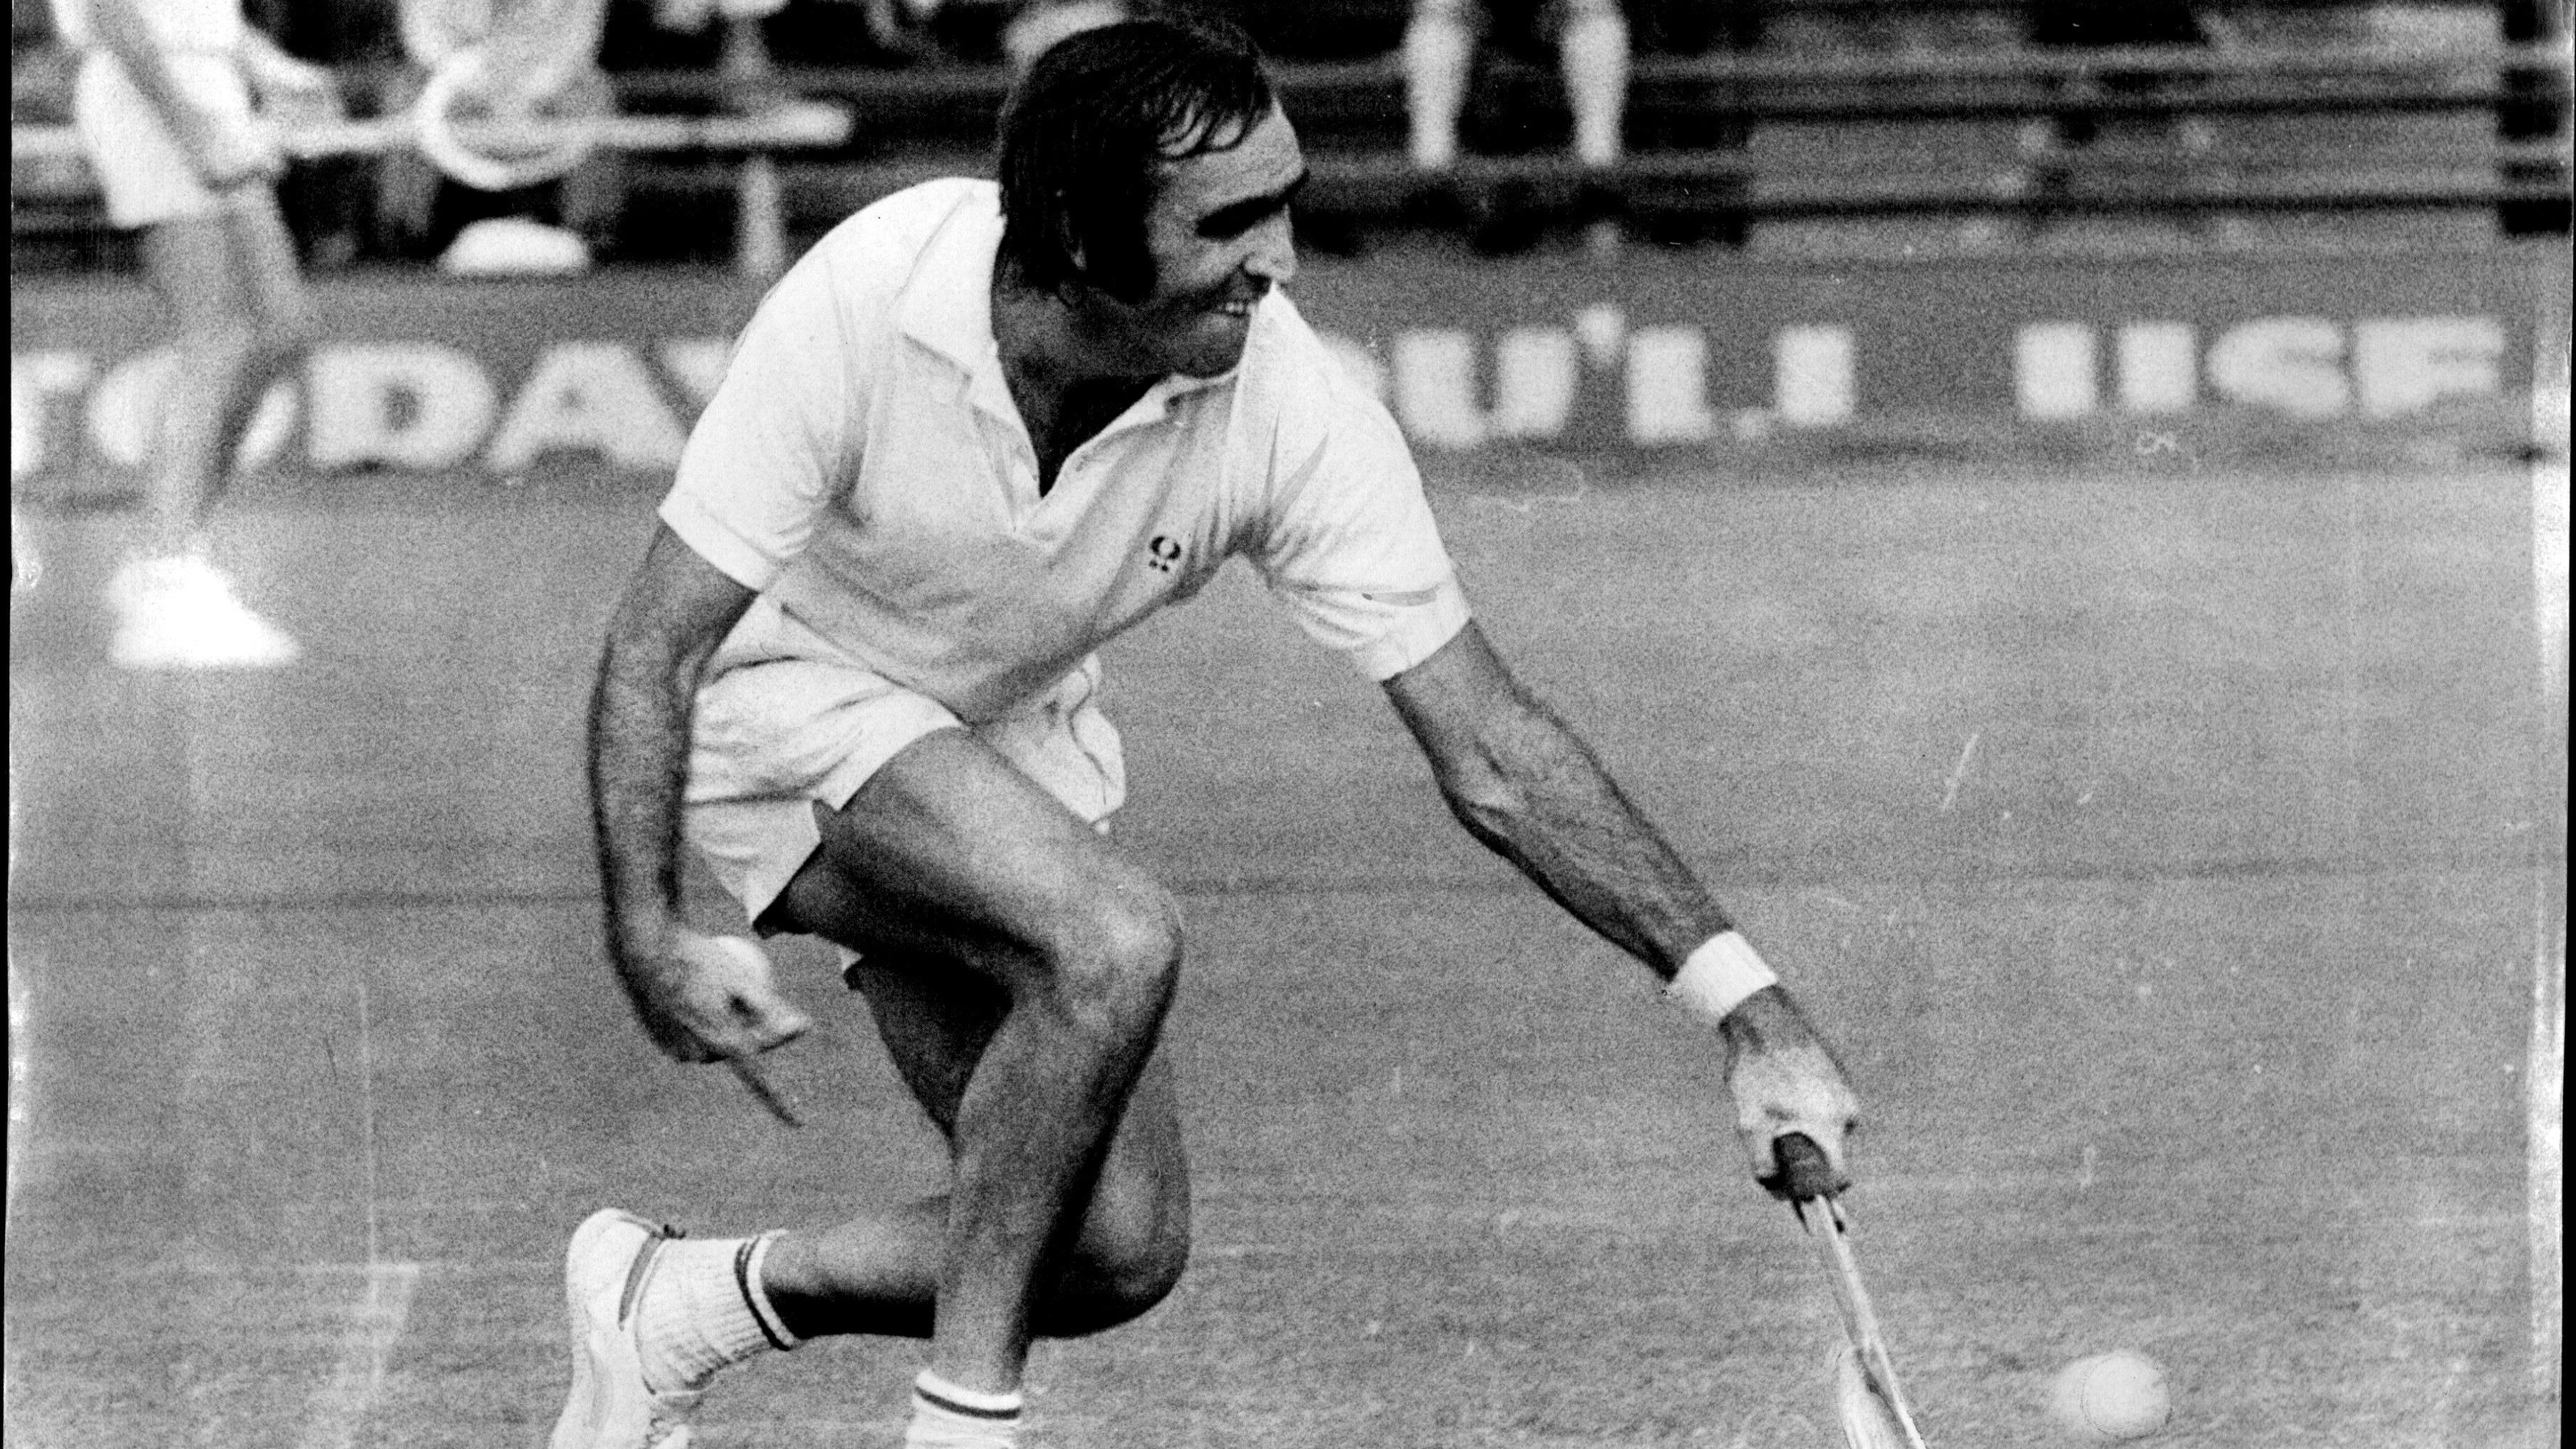 Australian tennis player Owen Davidson, who won 13 grand slam doubles titles, dies aged 79